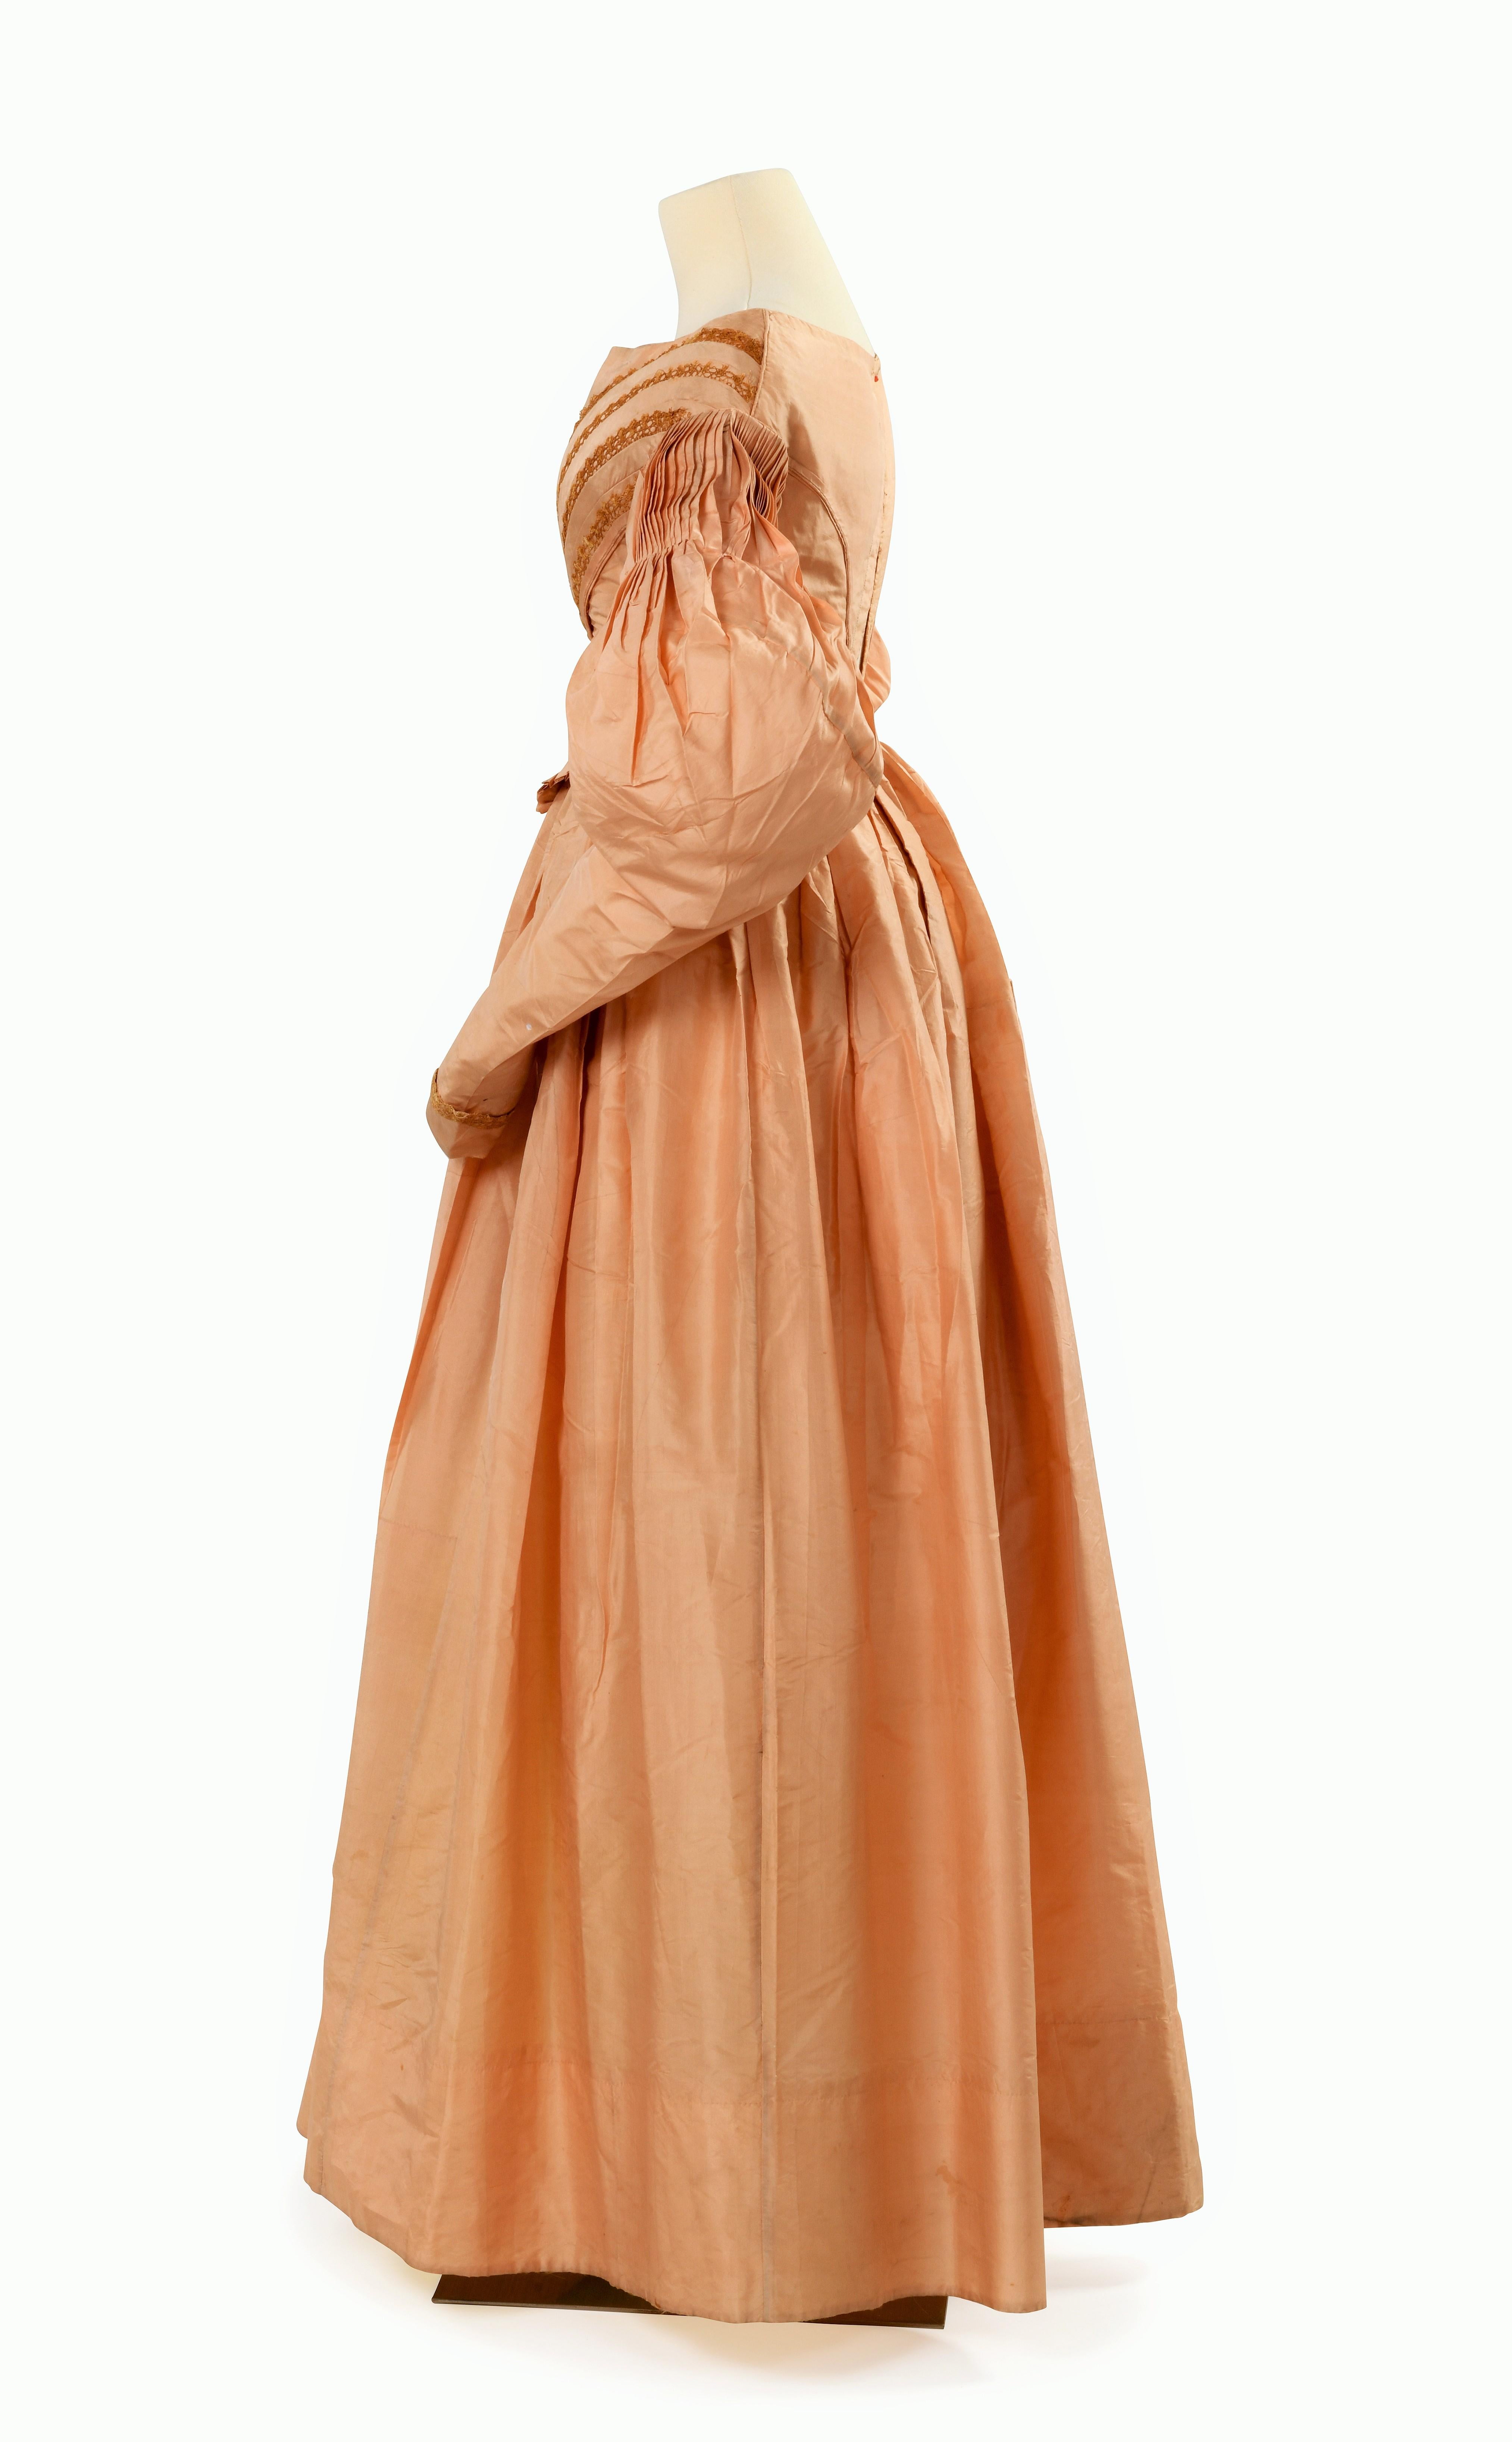 Orange A French Romantic Period taffeta pale pink Taffeta Dress- France Circa 1835-1840